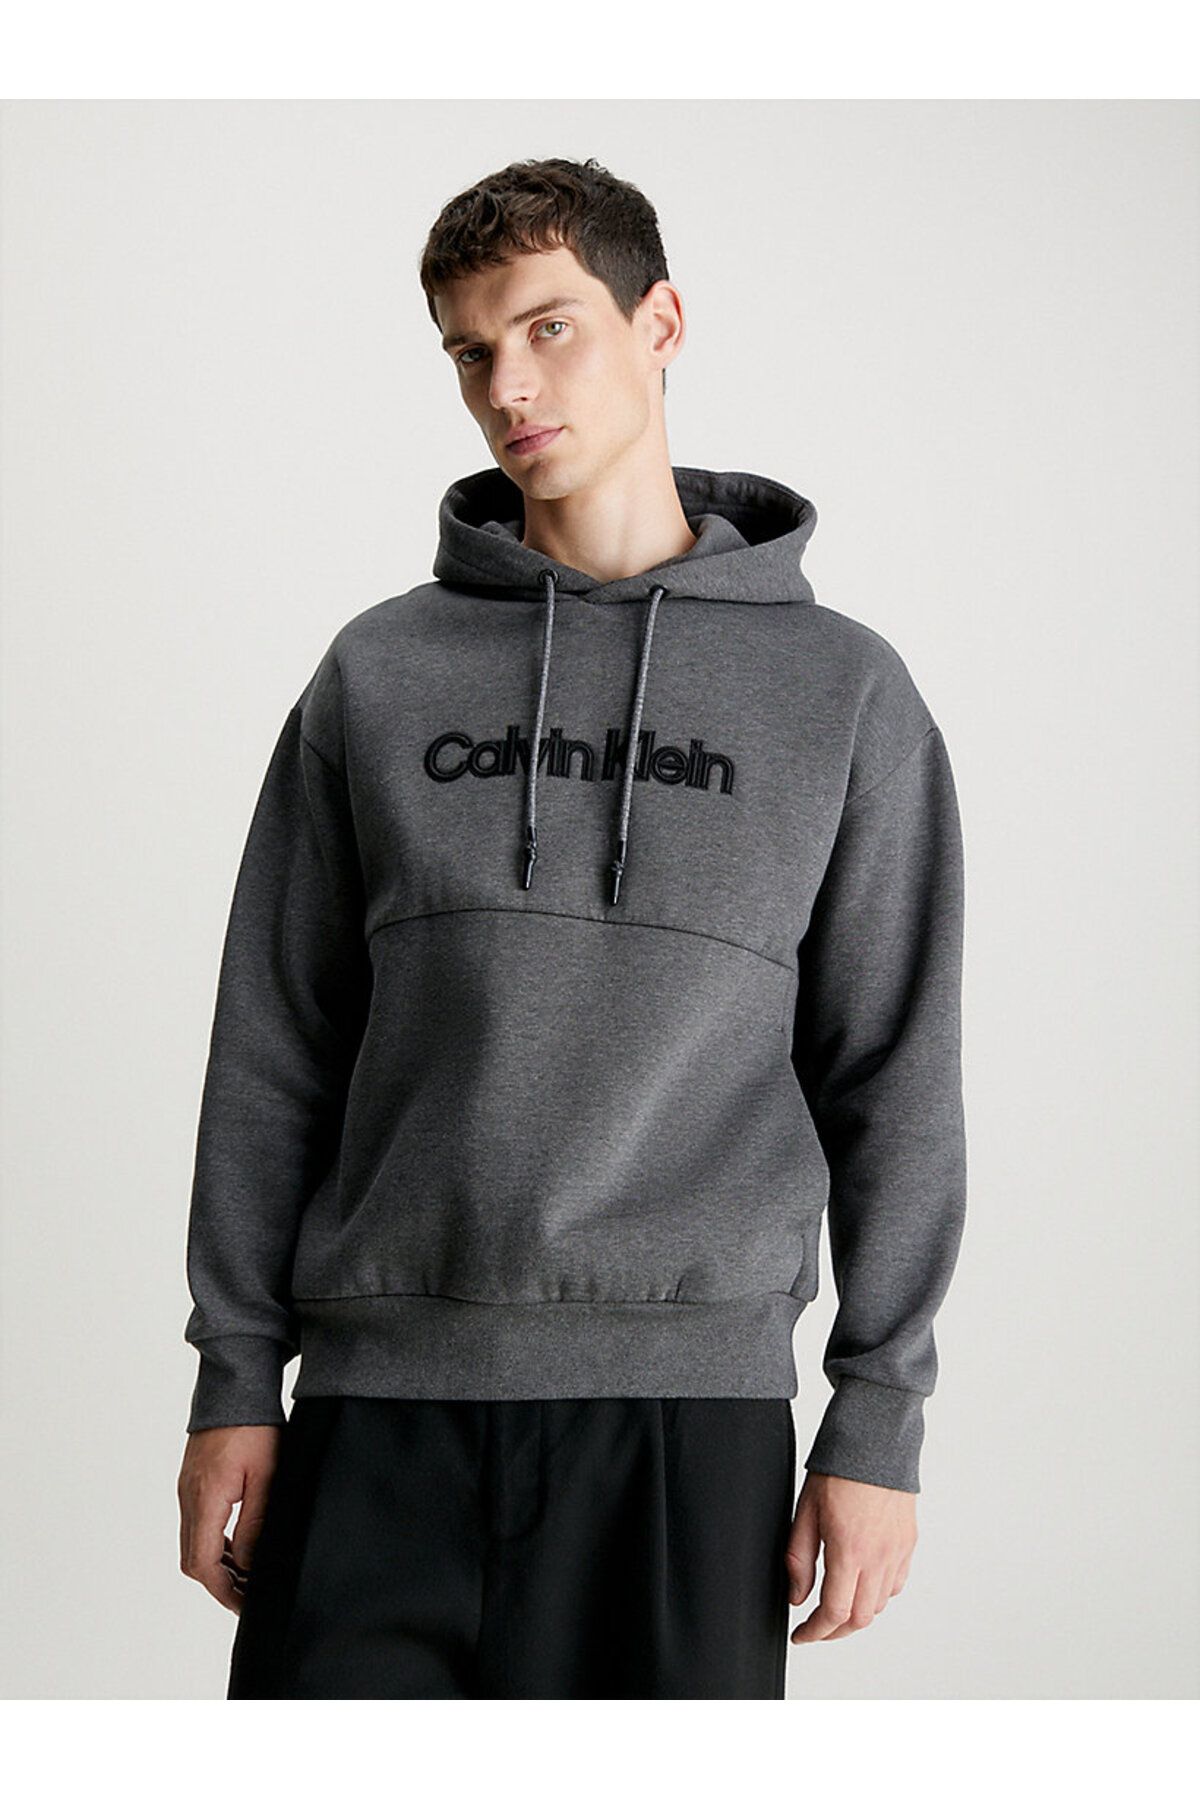 Calvin Klein RAISED EMBROIDERED LOGO HOODIE